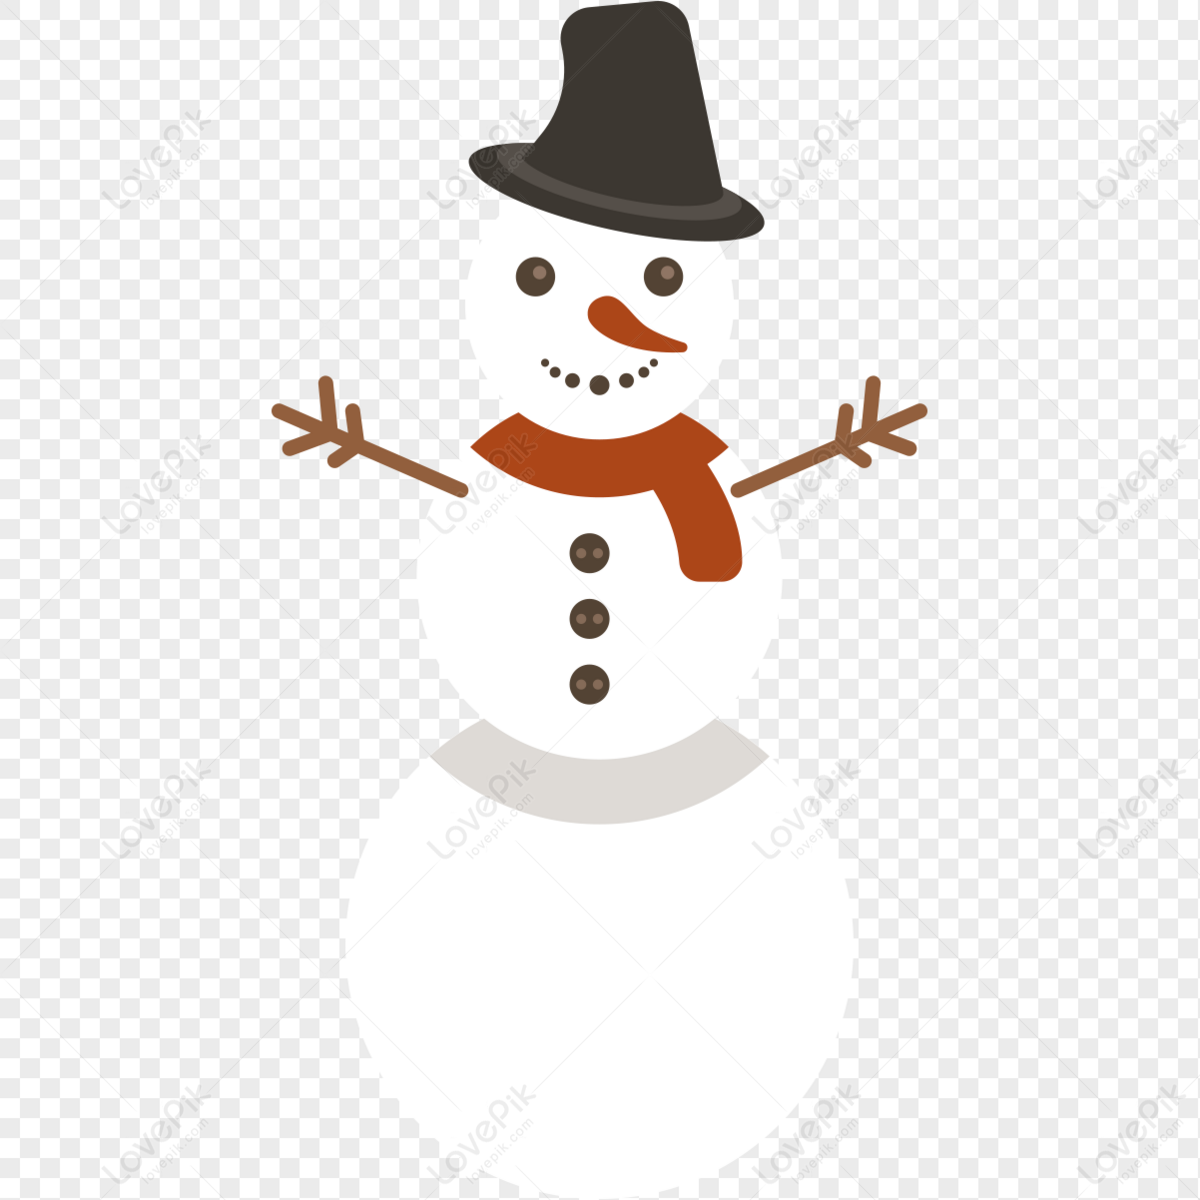 Снеговик в шляпе раскраска. Снеговик рисунок без шляпы. Снеговик в шляпе крючком. Картинка снеговики без морковок